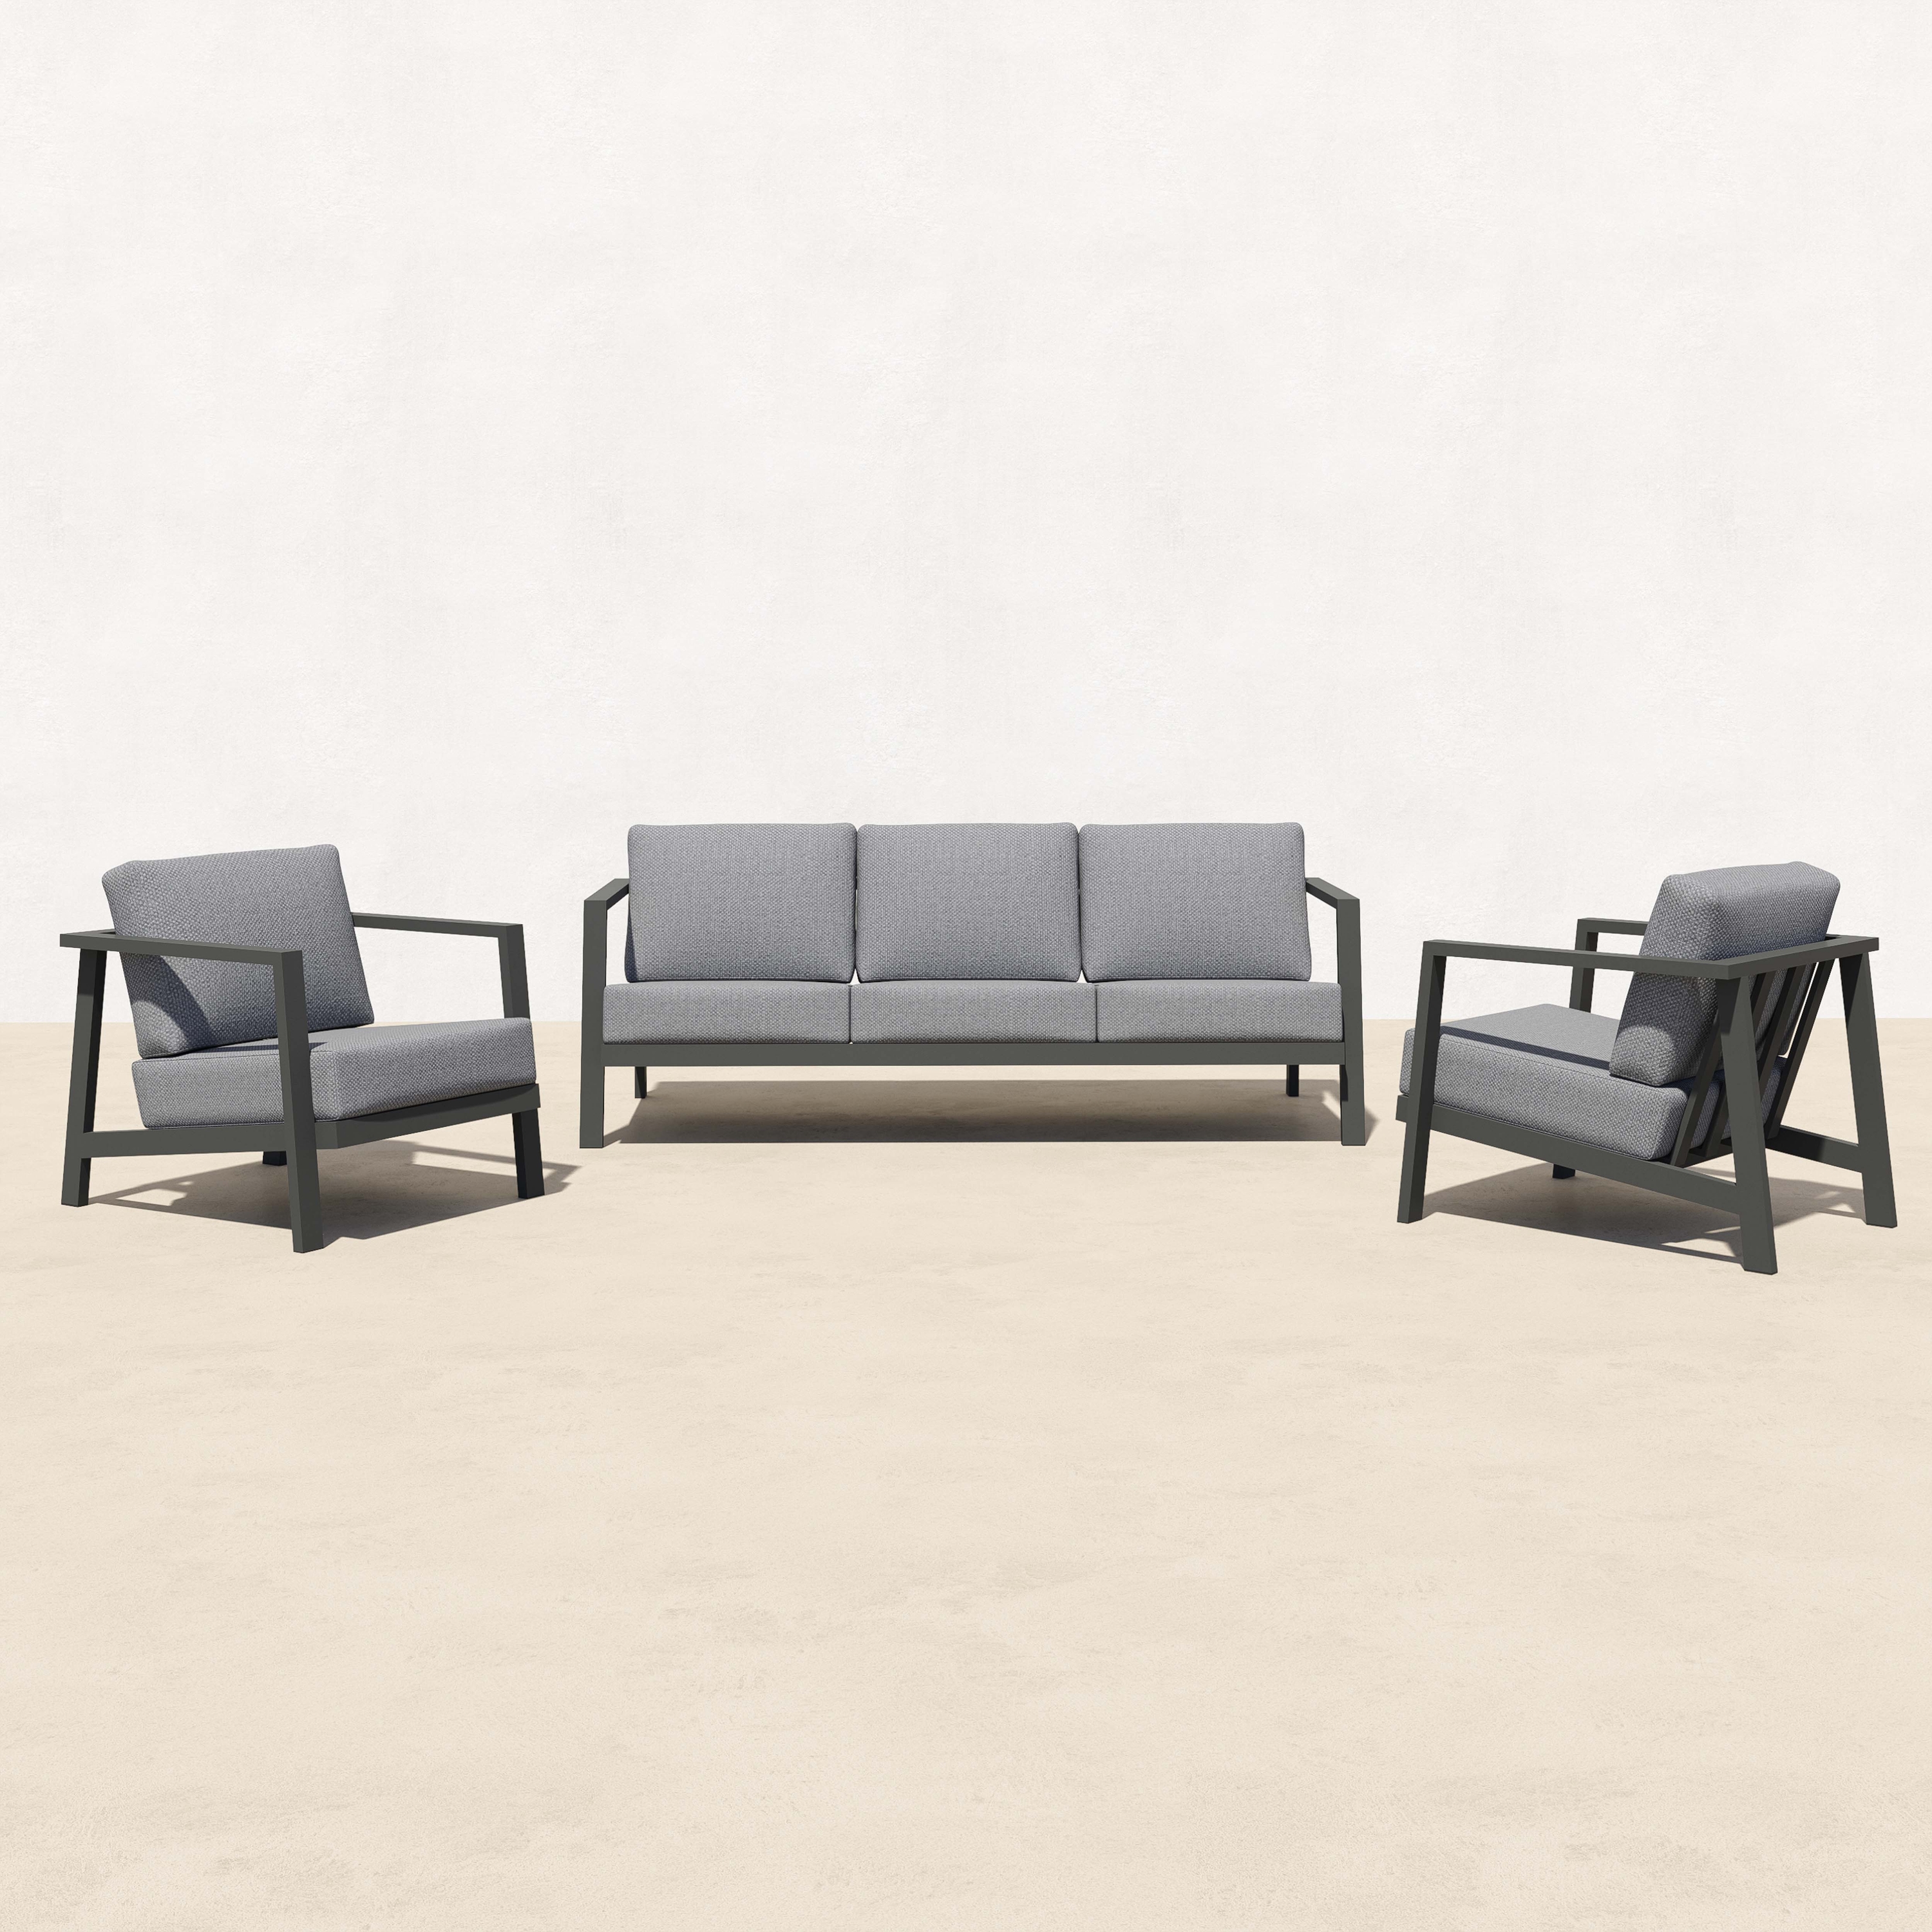 KATE Aluminum Outdoor Sofa with Armchairs - 5 Seat-Baeryon Furniture